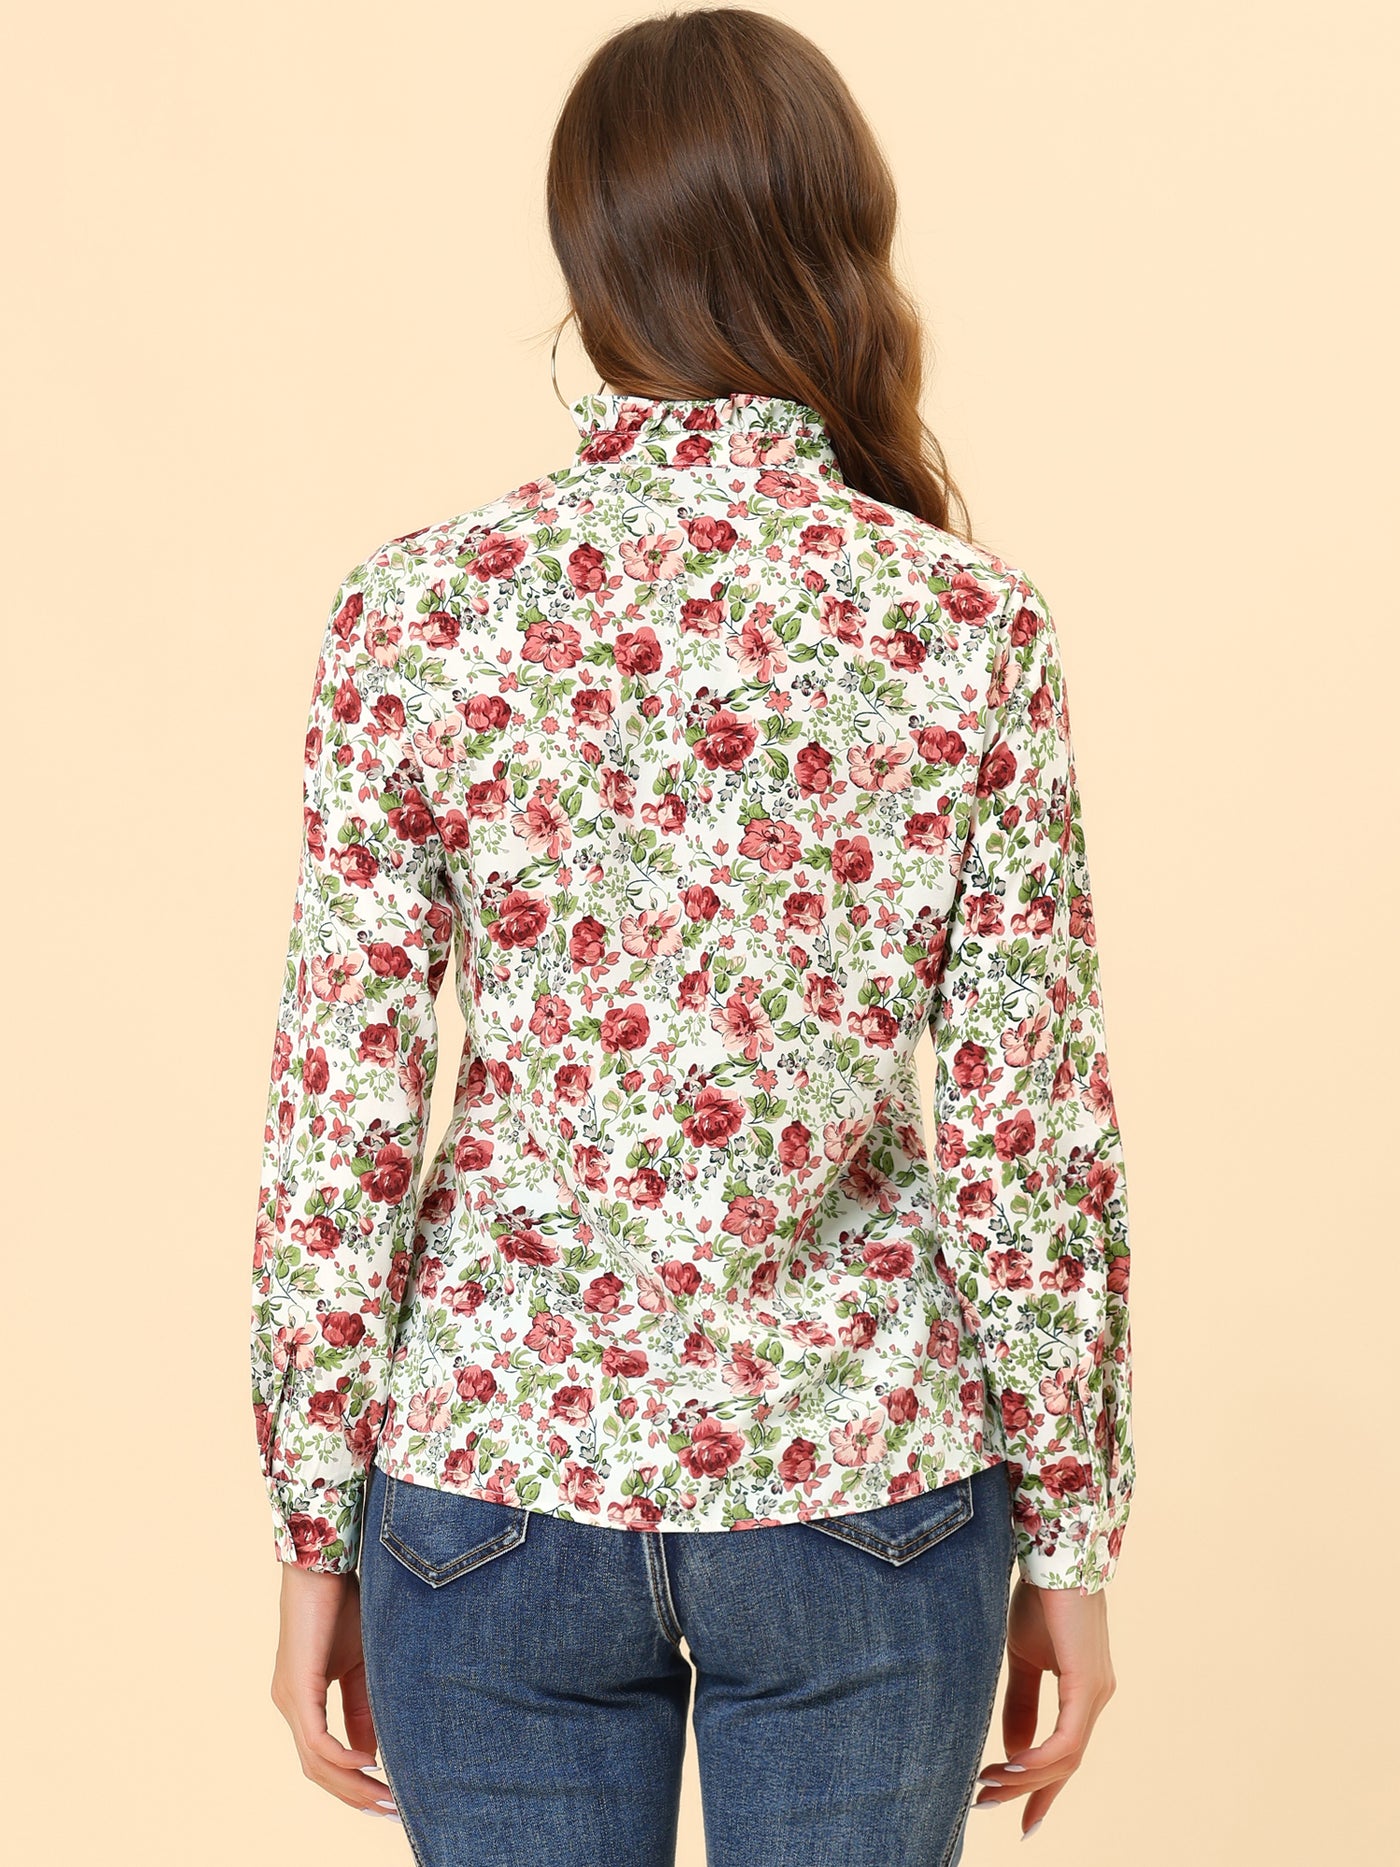 Allegra K Floral Flower Printed Shirt Ruffled Button Up Mock Neck Top Blouse